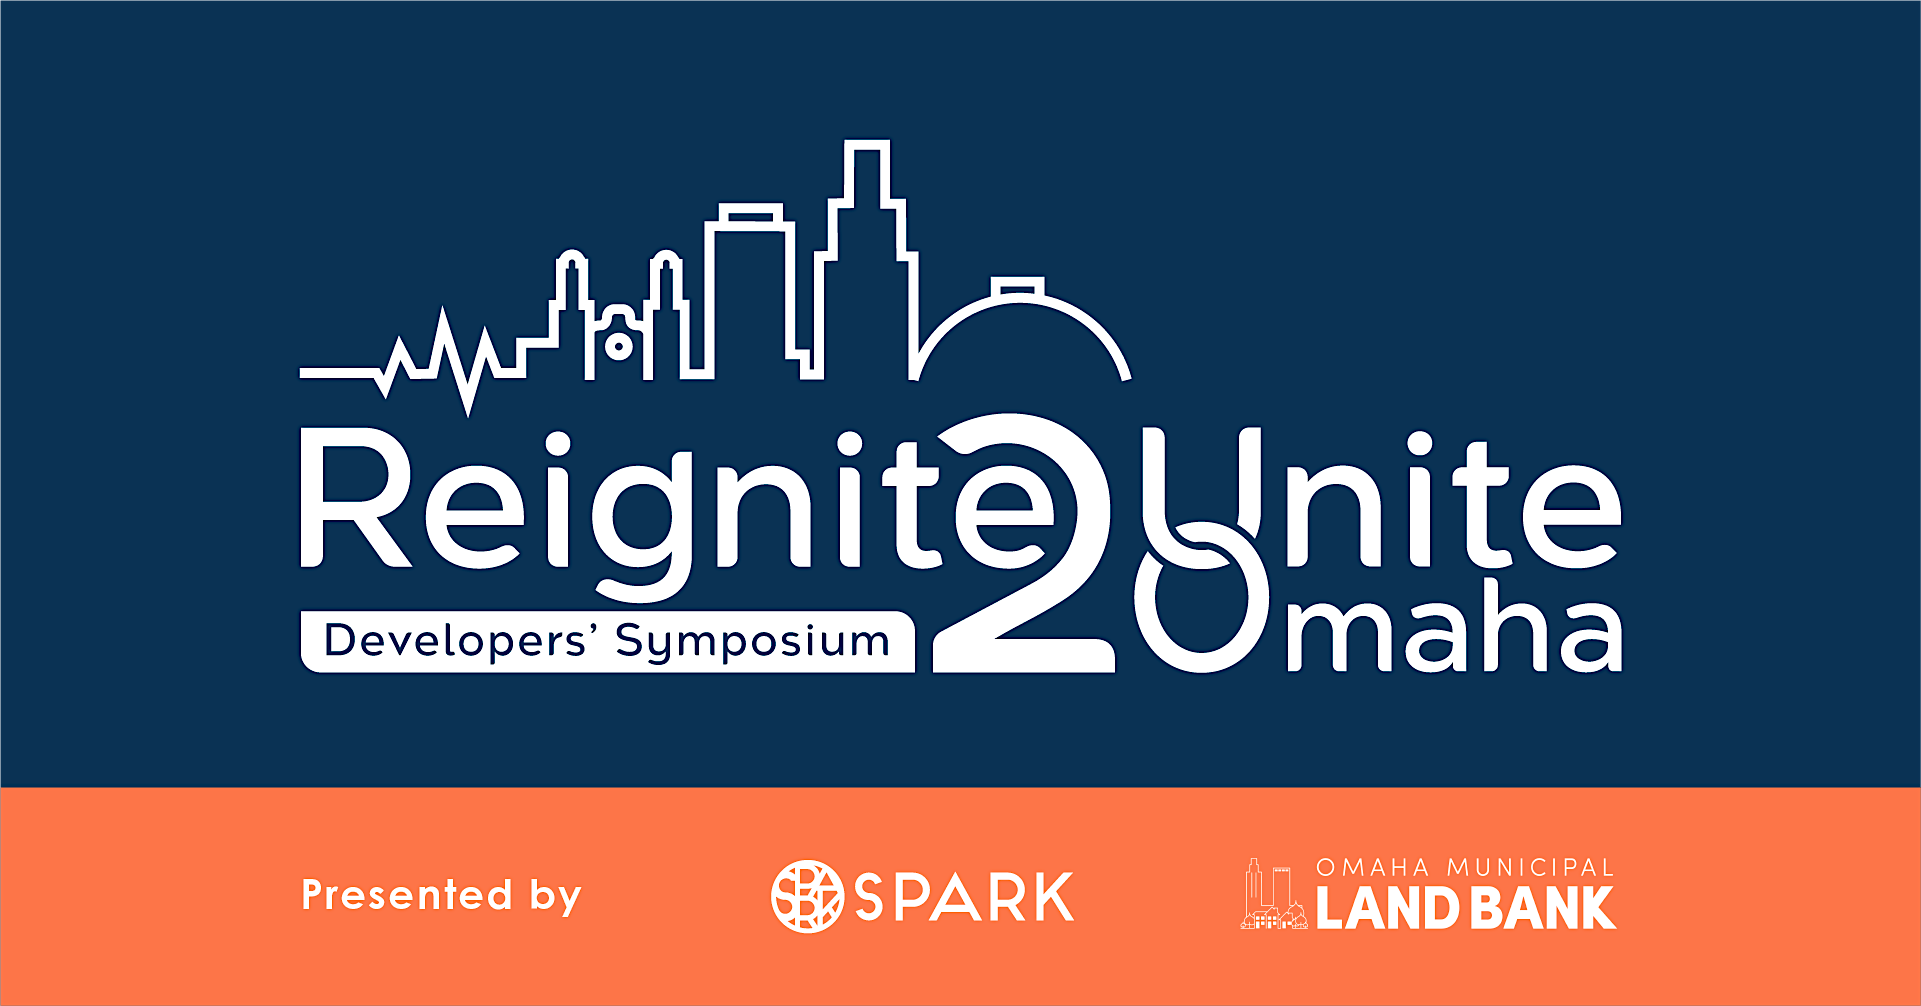 Reignite2Unite Omaha | Developers' Symposium